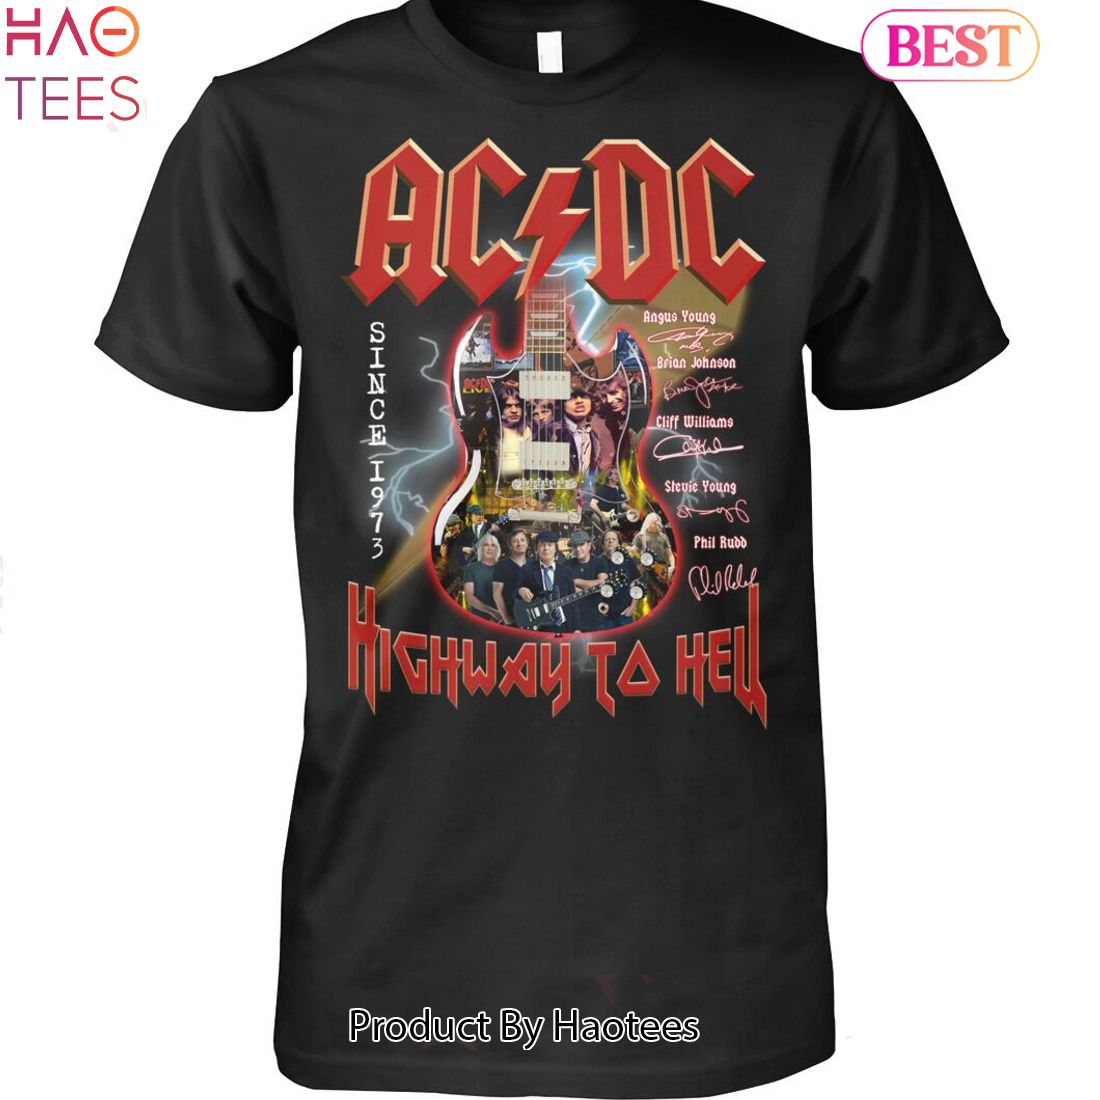 Acdc Highway To Hell Signature Unisex T-shirt Sweatshirt Hoodie